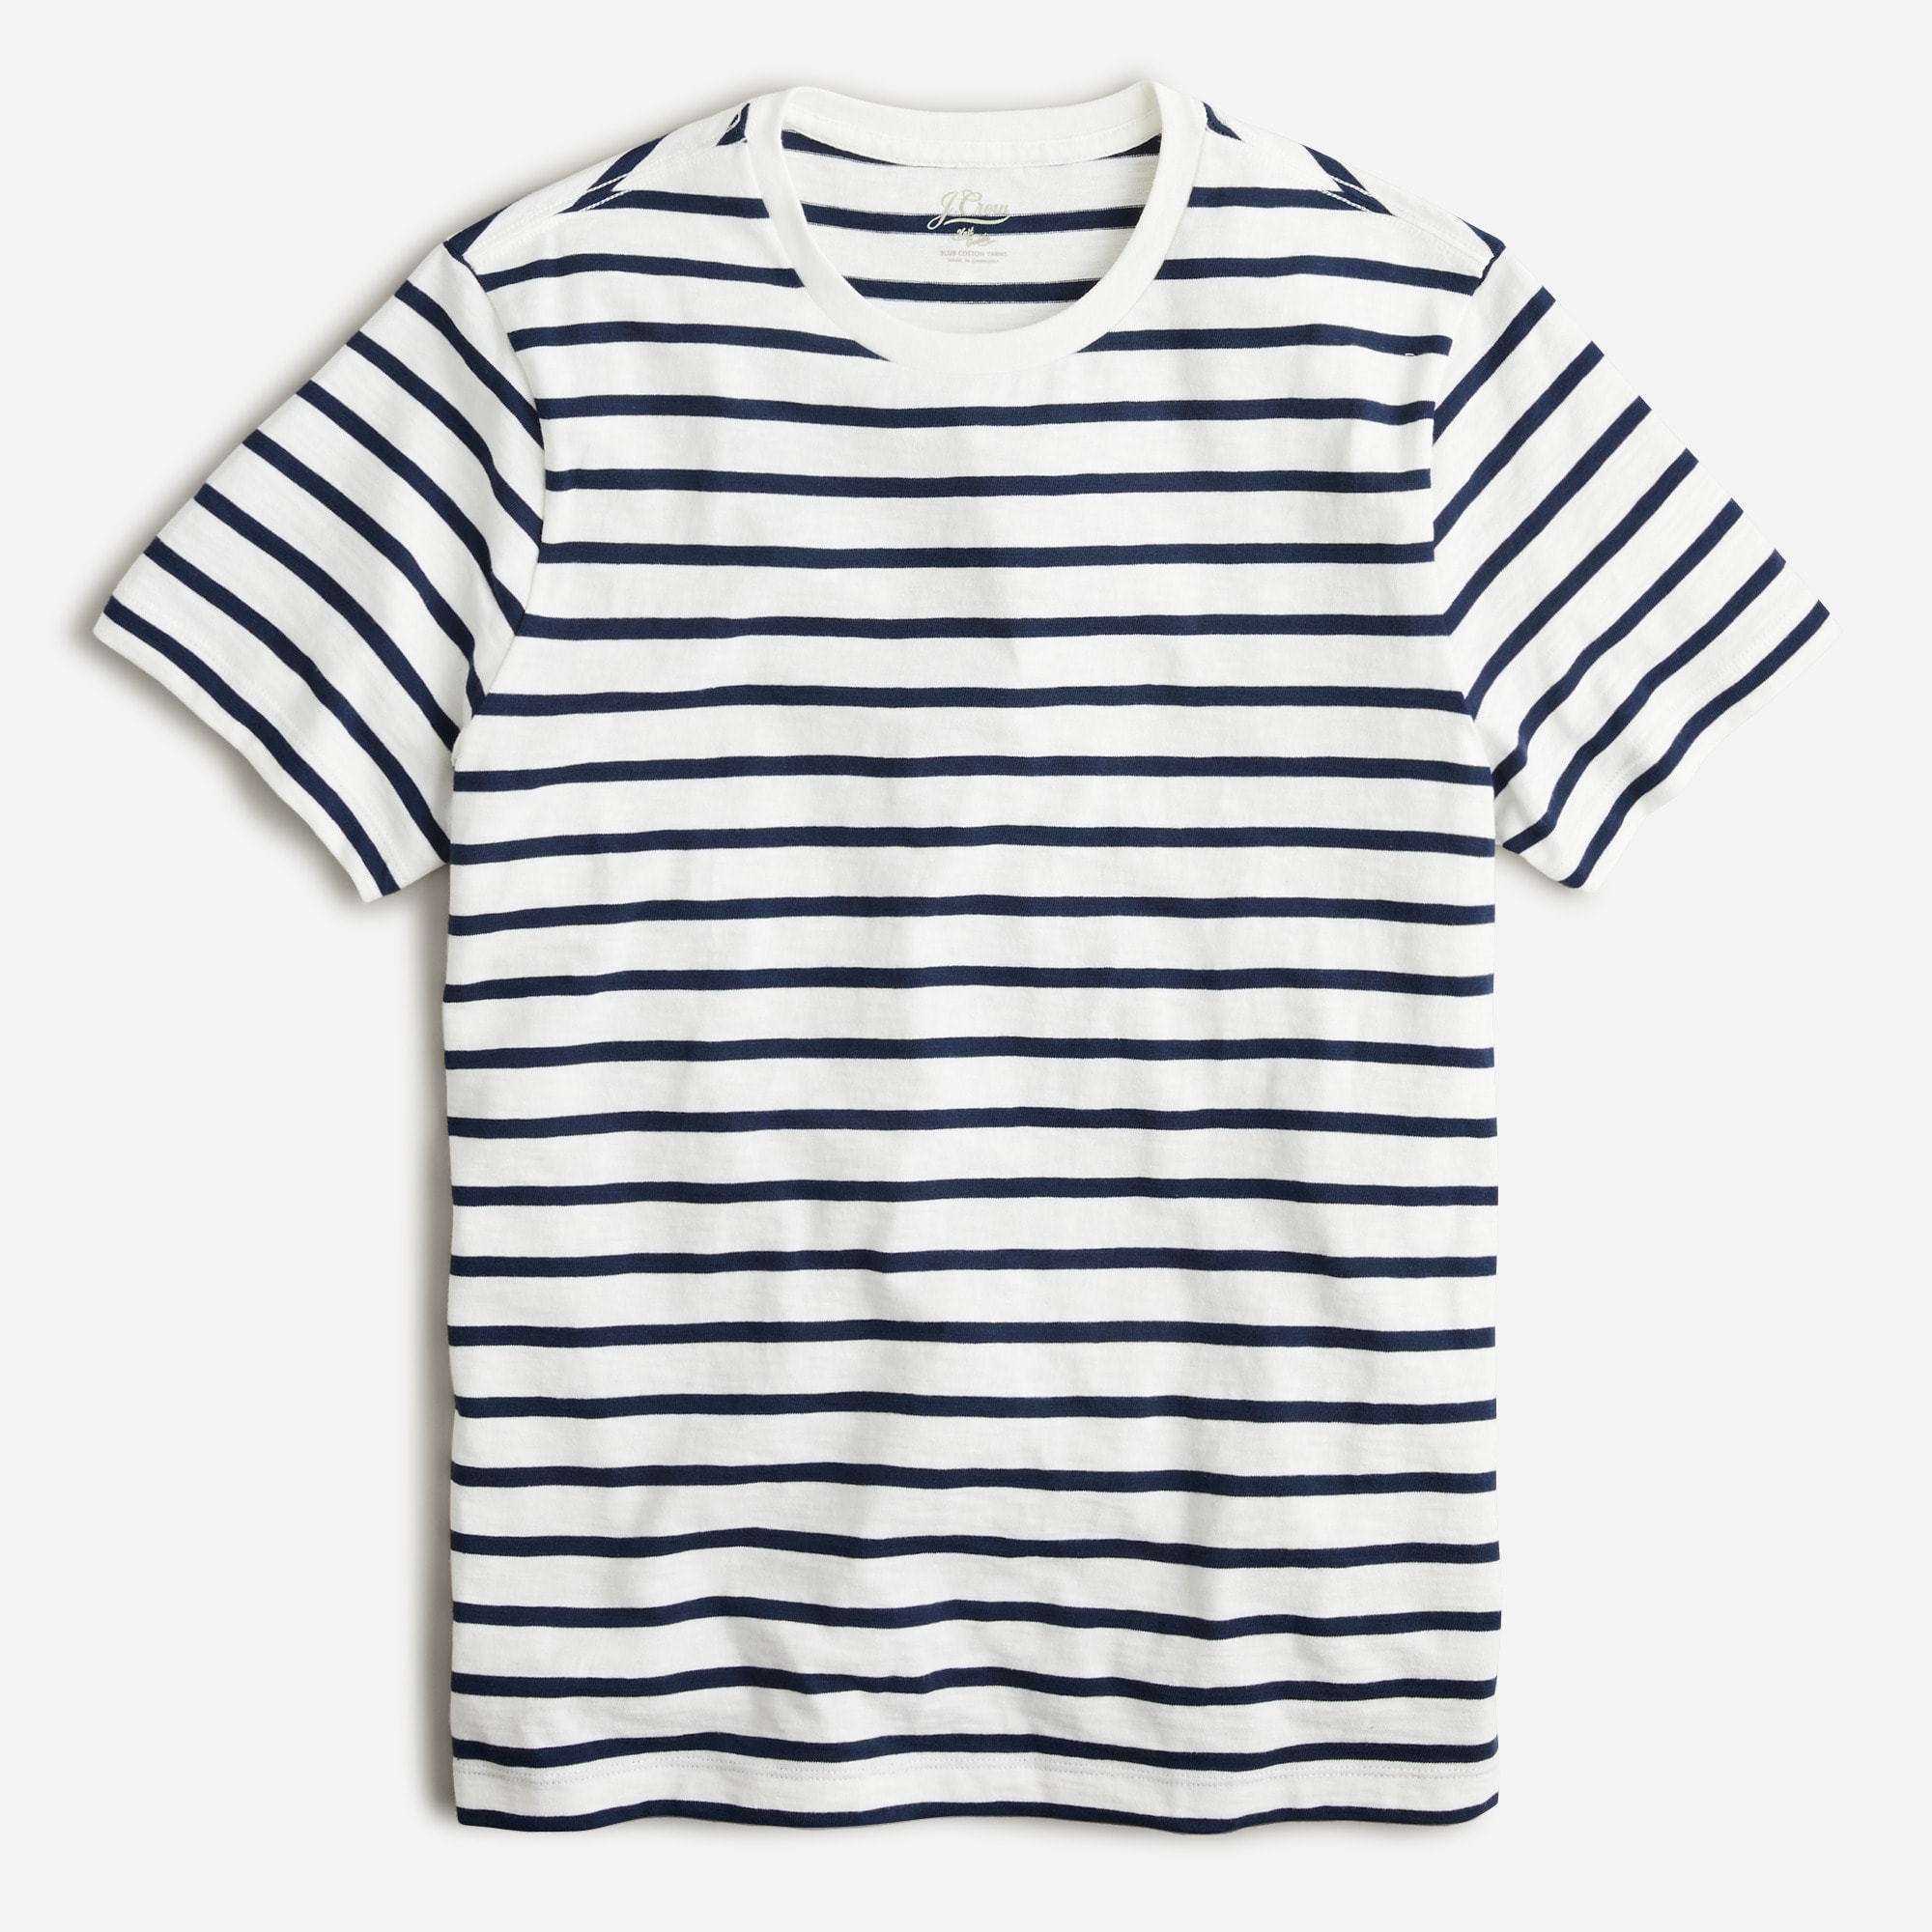 J.Crew: Slub Jersey T-shirt In Deck Stripe For Men